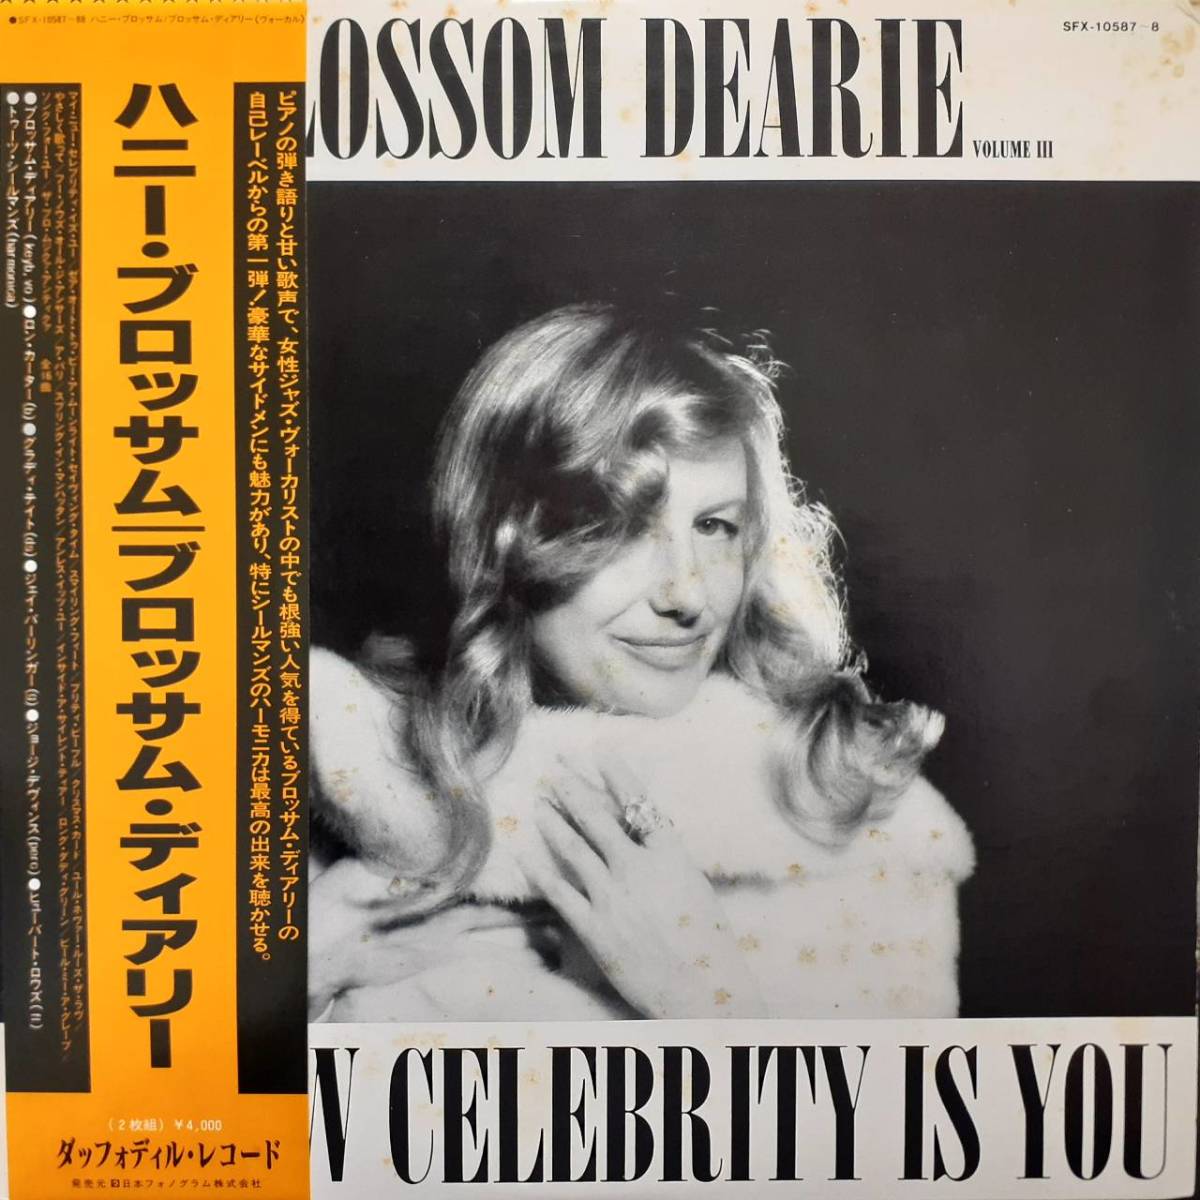 PROMO日本盤2LP帯付き！見本盤 白ラベル！Blossom Dearie / My New Celebrity Is You 1979年 Daffodil SFX-10587~8 ブロッサム・ディアリー